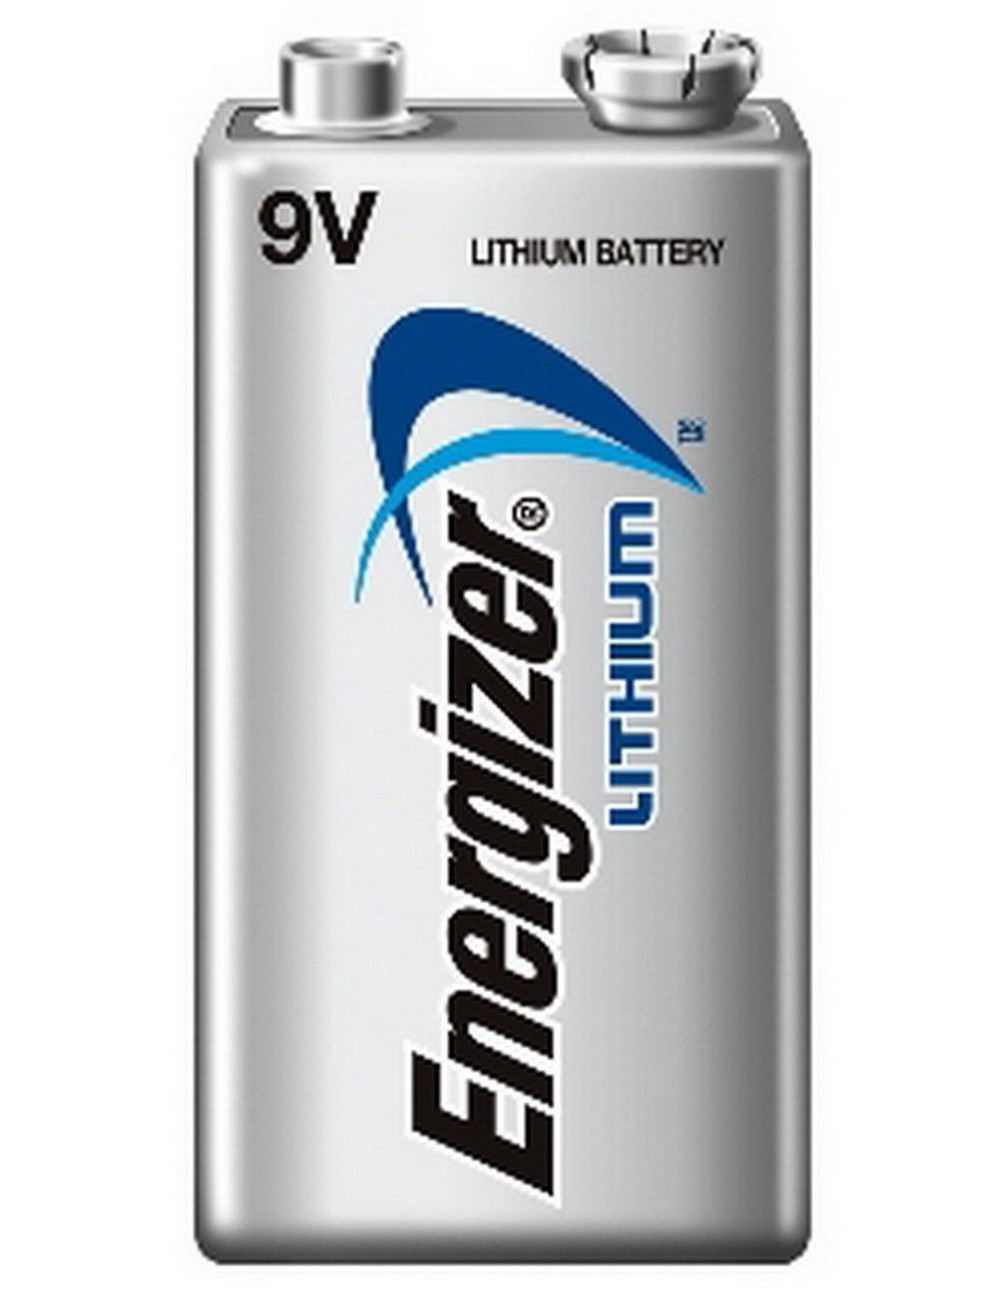 Lithium battery Ultimate 9V 1000mAh (Energizer)